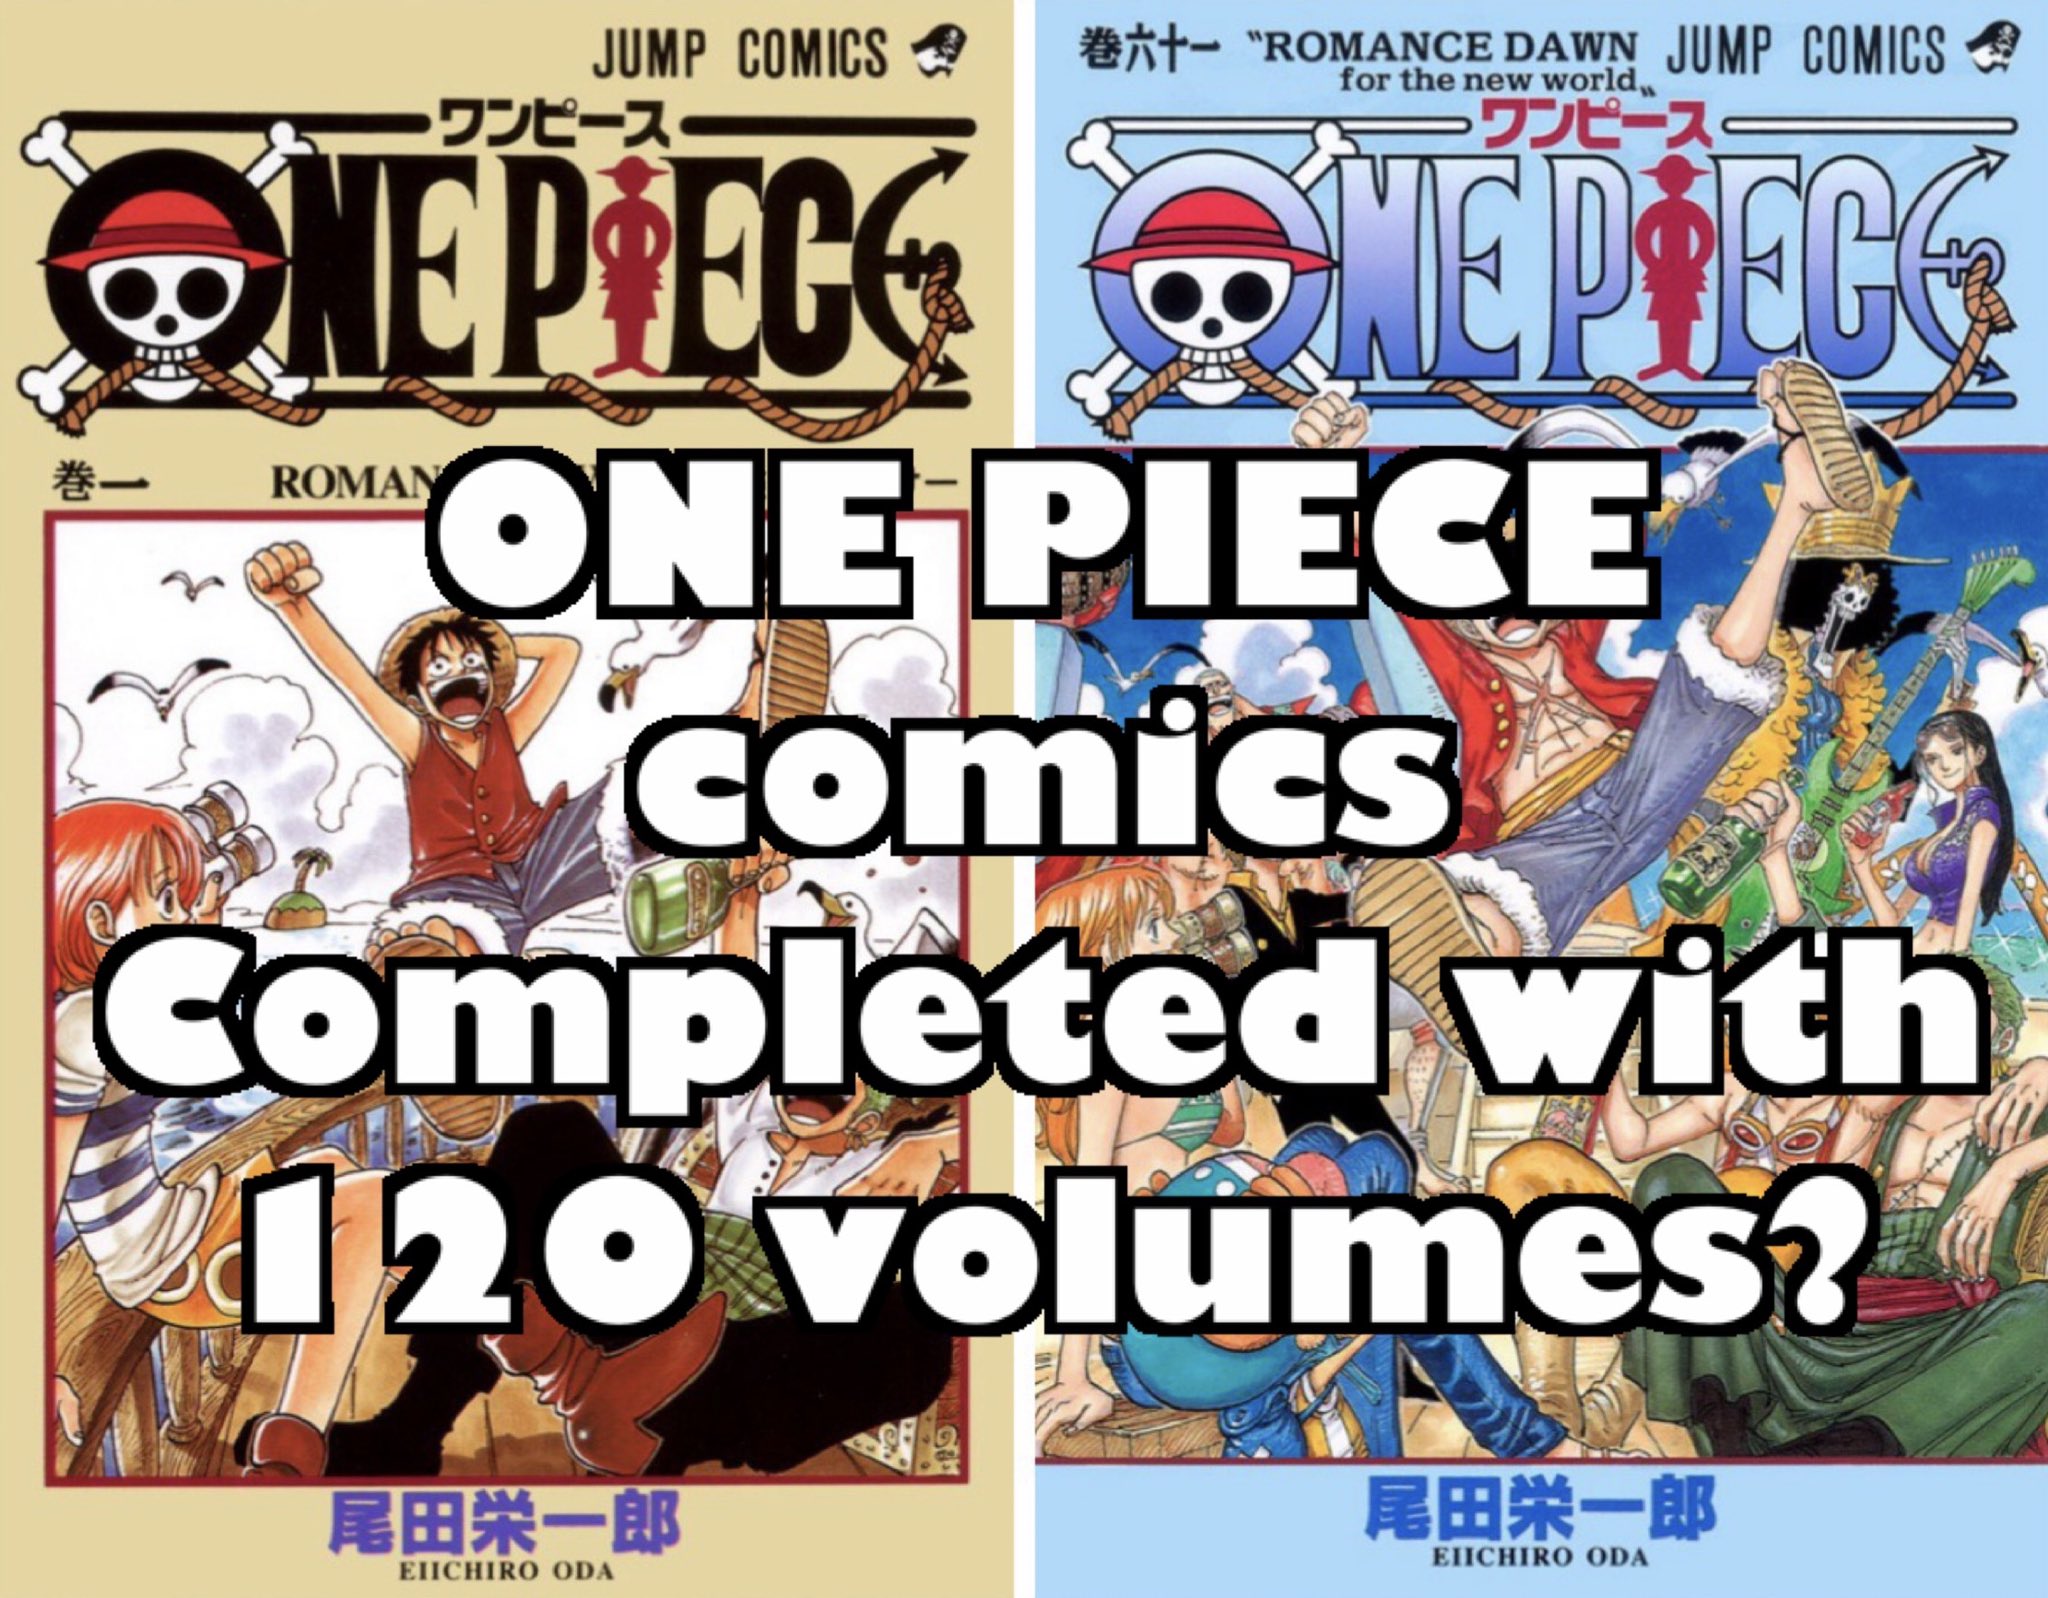 Log ワンピース考察 尾田先生の あと5年で終わりたい 発言から考えるとやはり One Piece ワンピース コミックス1巻完結説を考える T Co Uot7qnq4ie T Co L2hzmmxggr Twitter